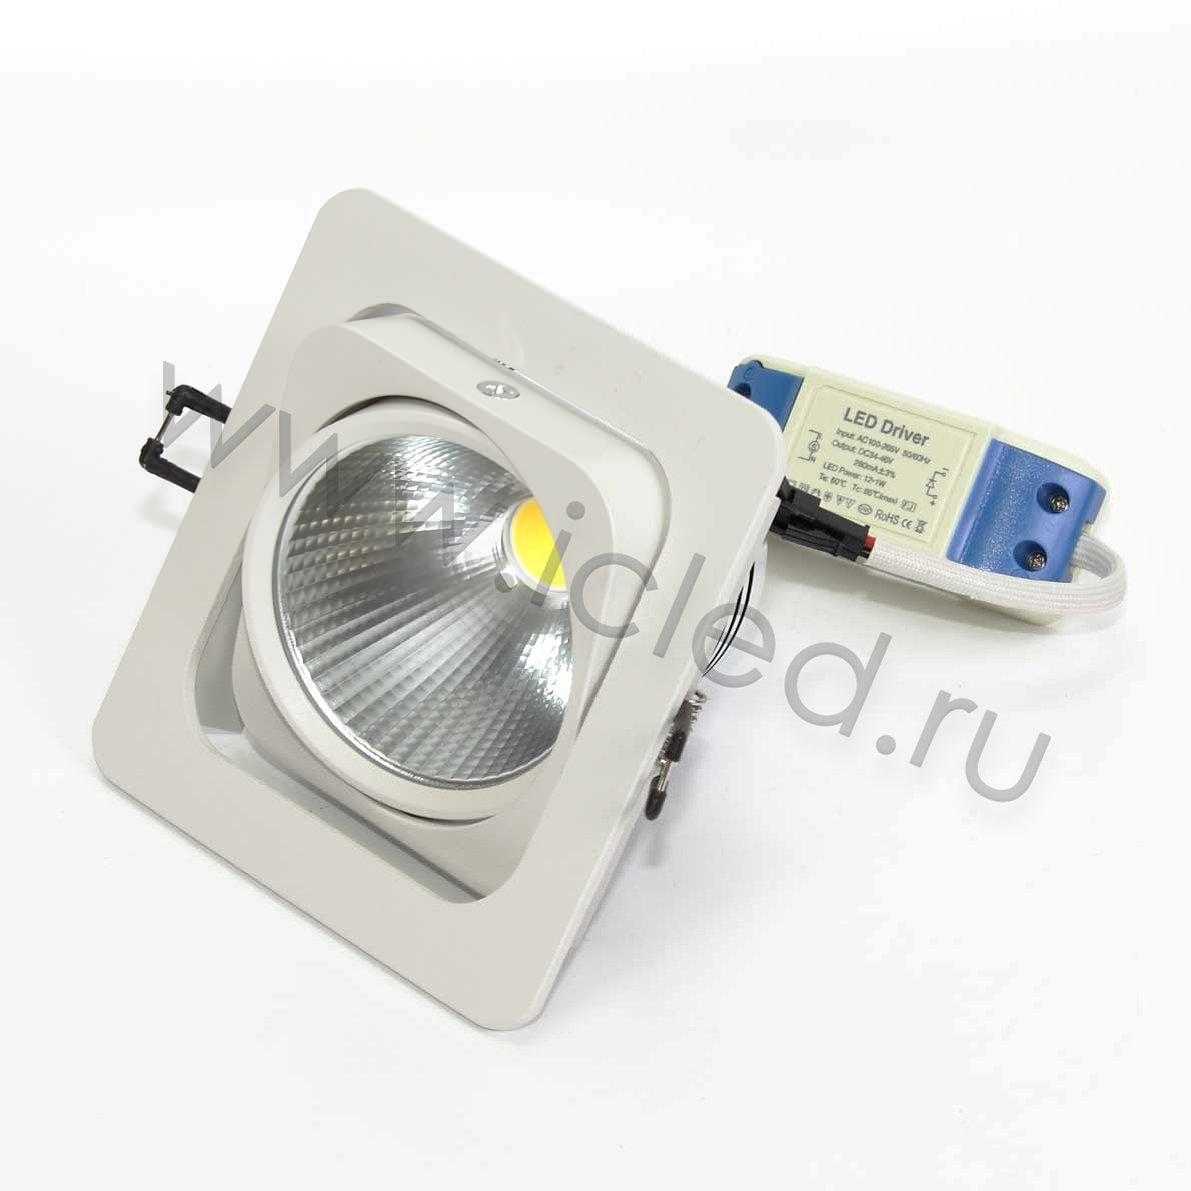 Светодиодные светильники Светодиодный светильник встраиваемый 120.1 series white housing BW132 (10W,220V,day white)